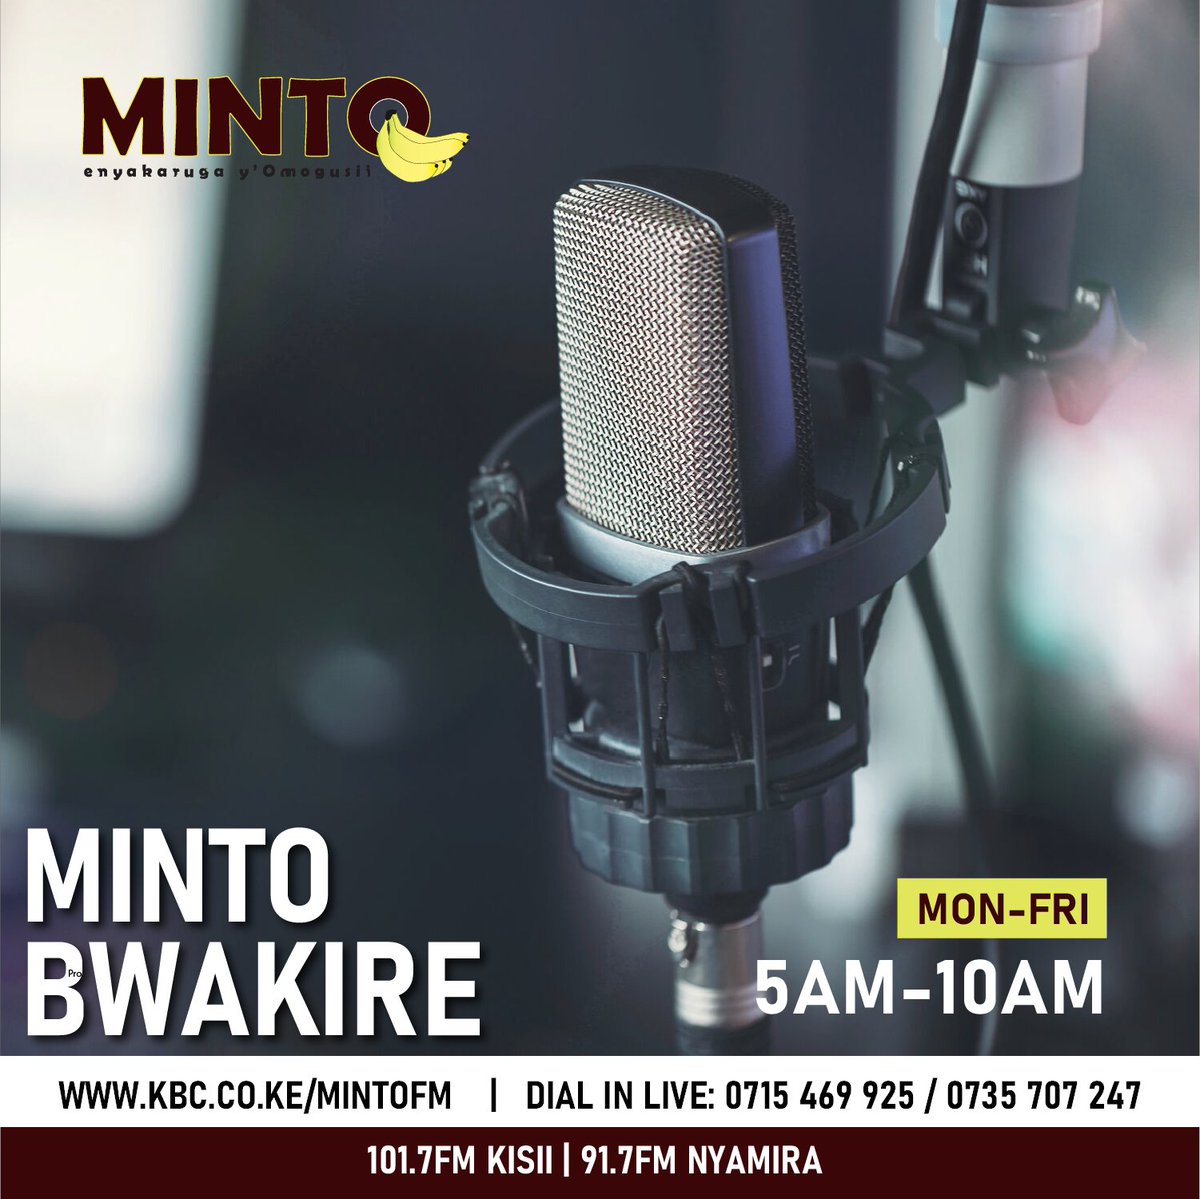 Minto Bwakire Thursday edition 5-10am. ^MK
#MintoFM
#KBCniYetu
#RiangaNaNyorosa